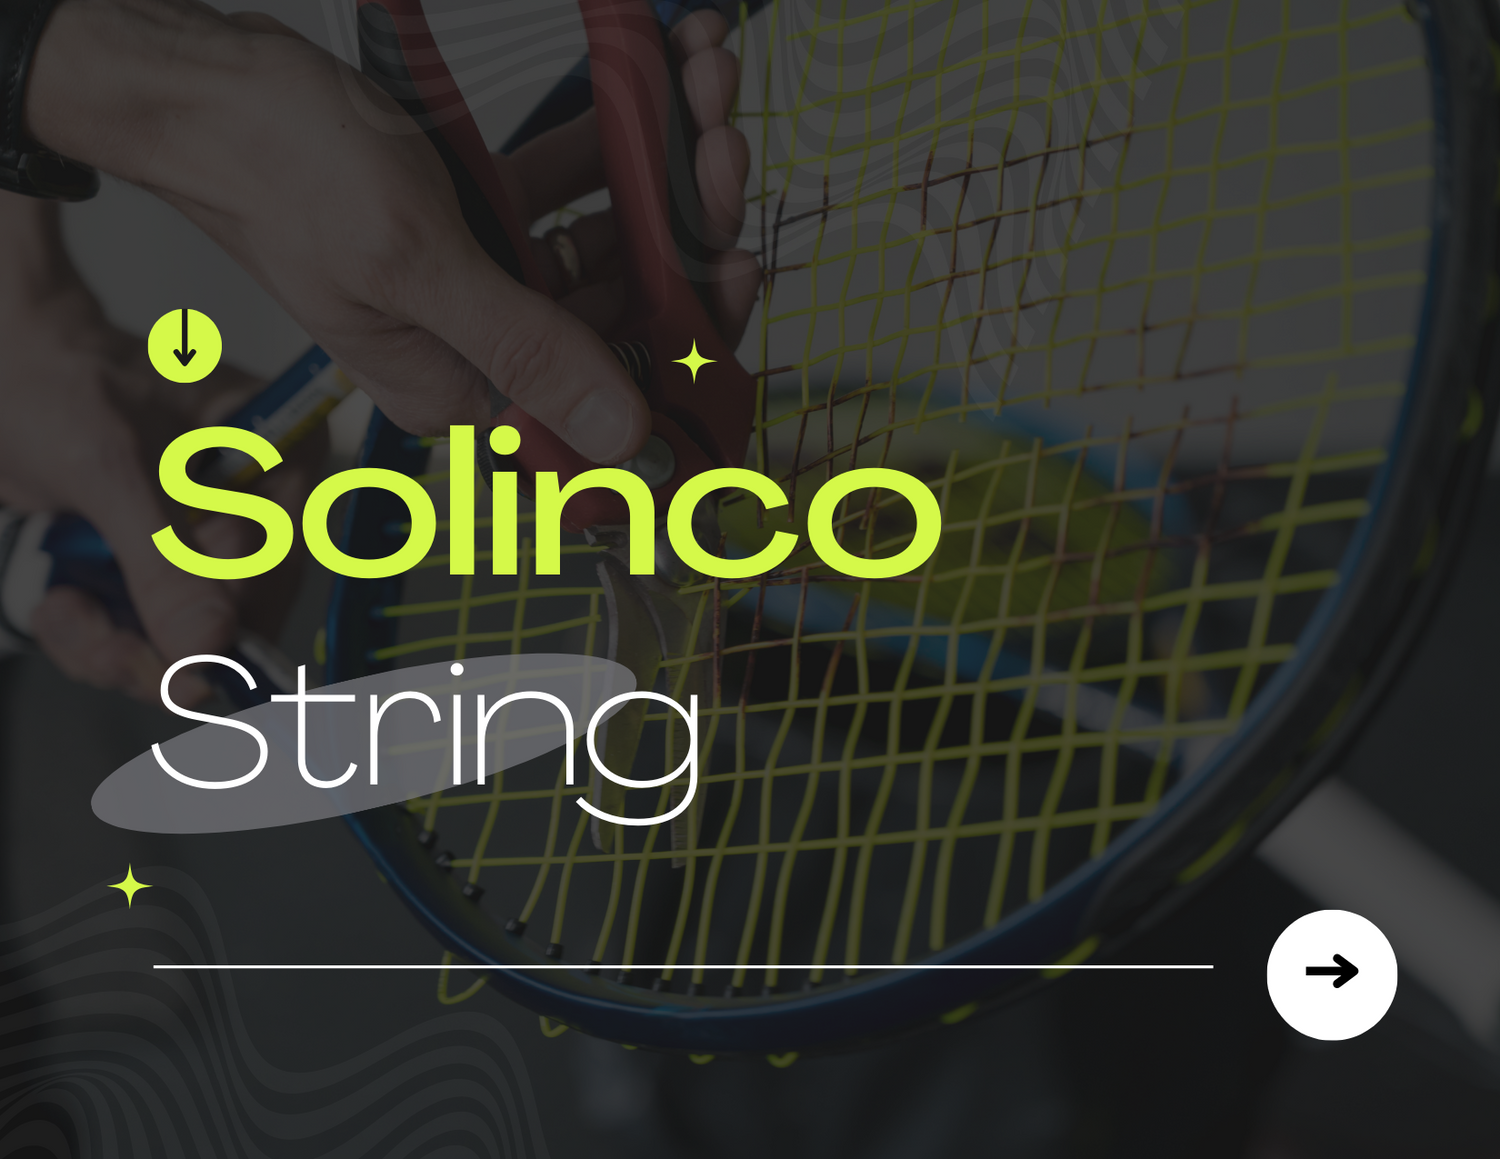 Solinco String